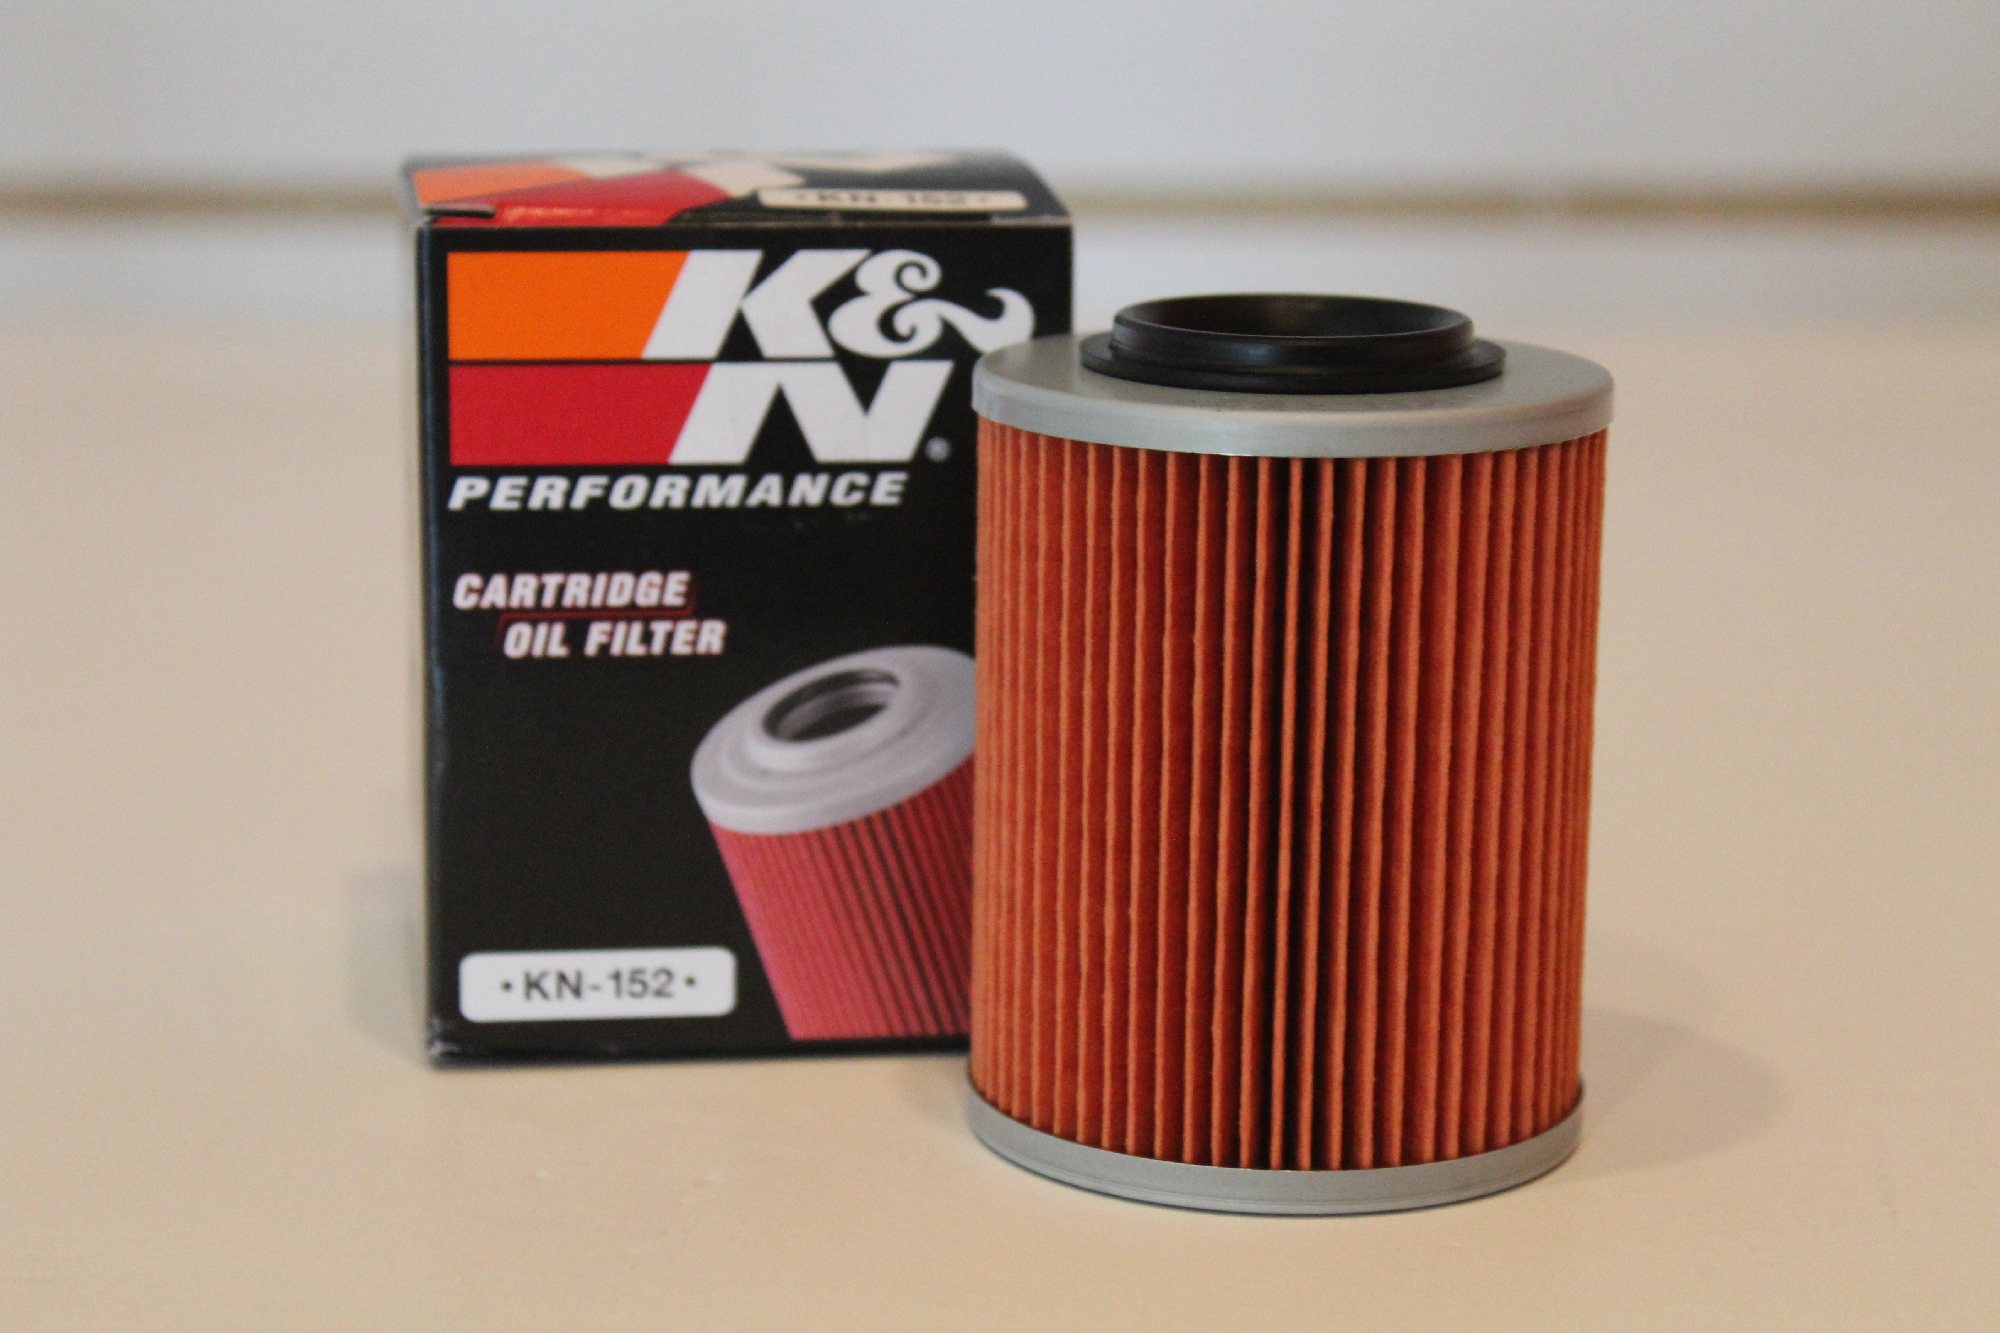 KN-152 Details about   K&N Oil Filter FOR BOMBARDIER OUTLANDER 330 HO 2X4 330 